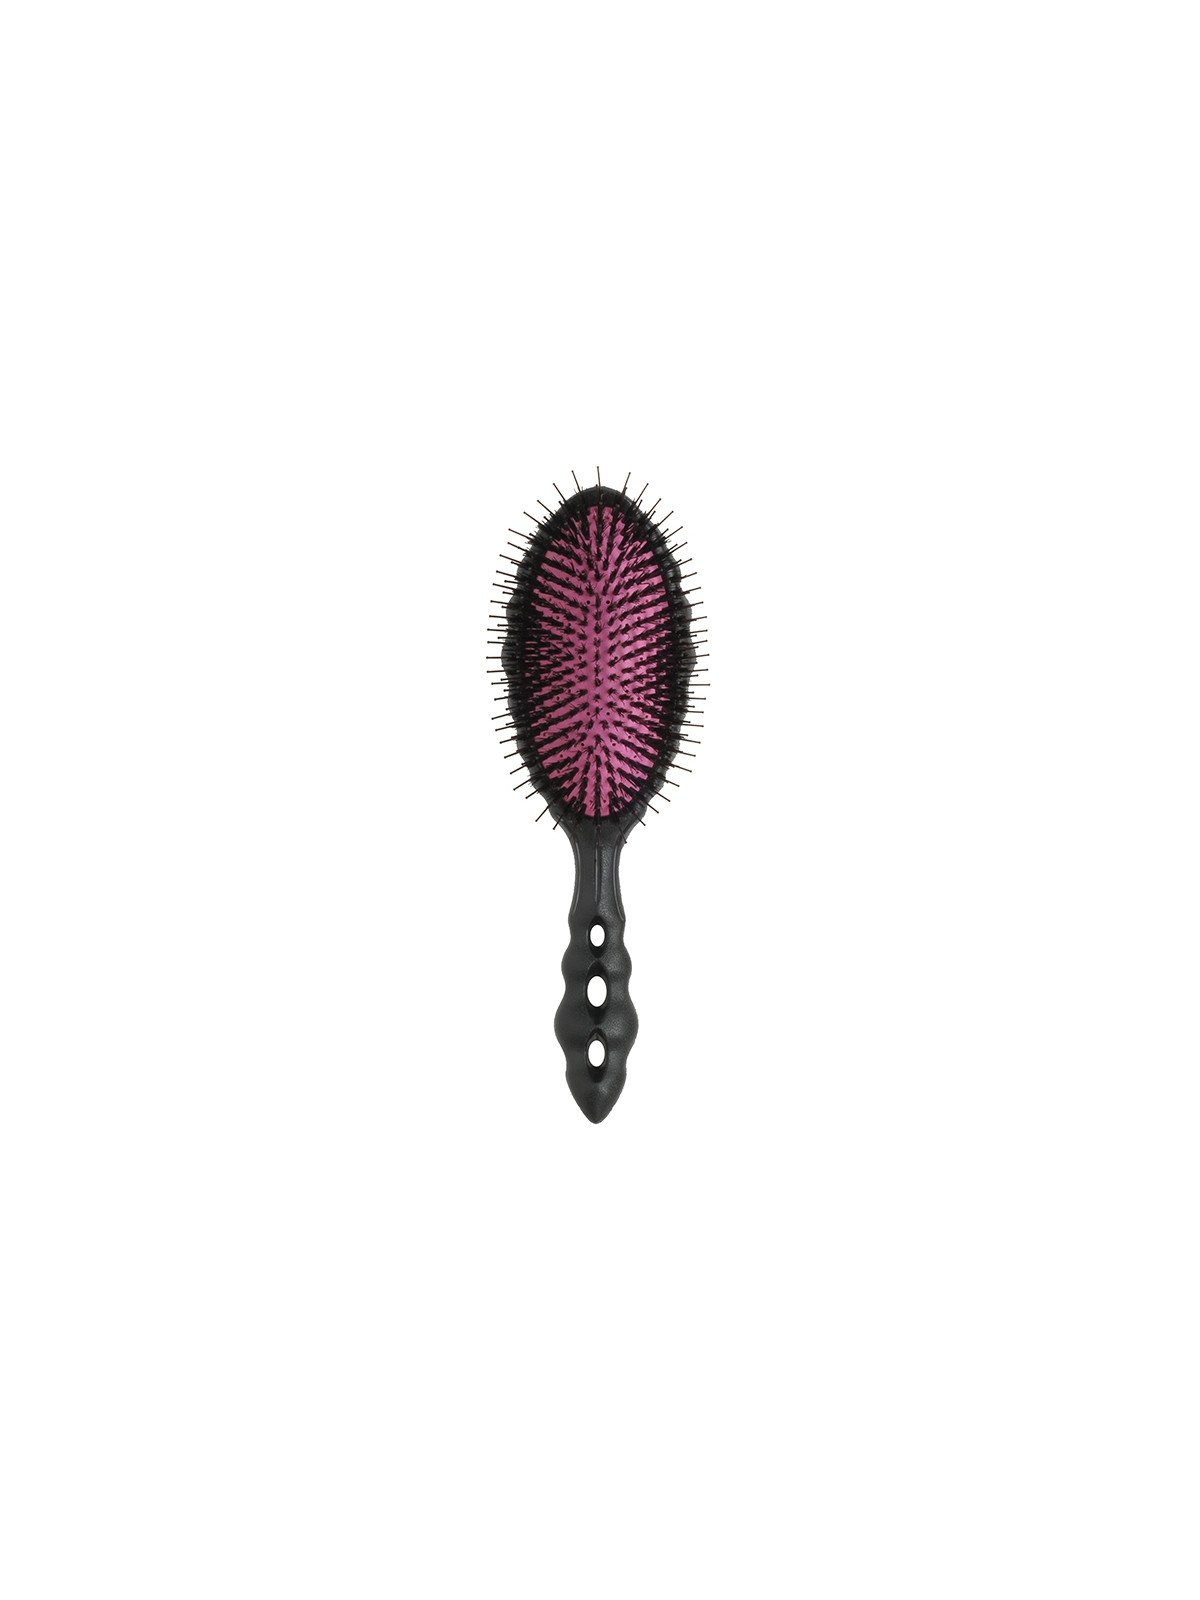 Y.S. Park Beetle Hairbrush Boar/Nylon